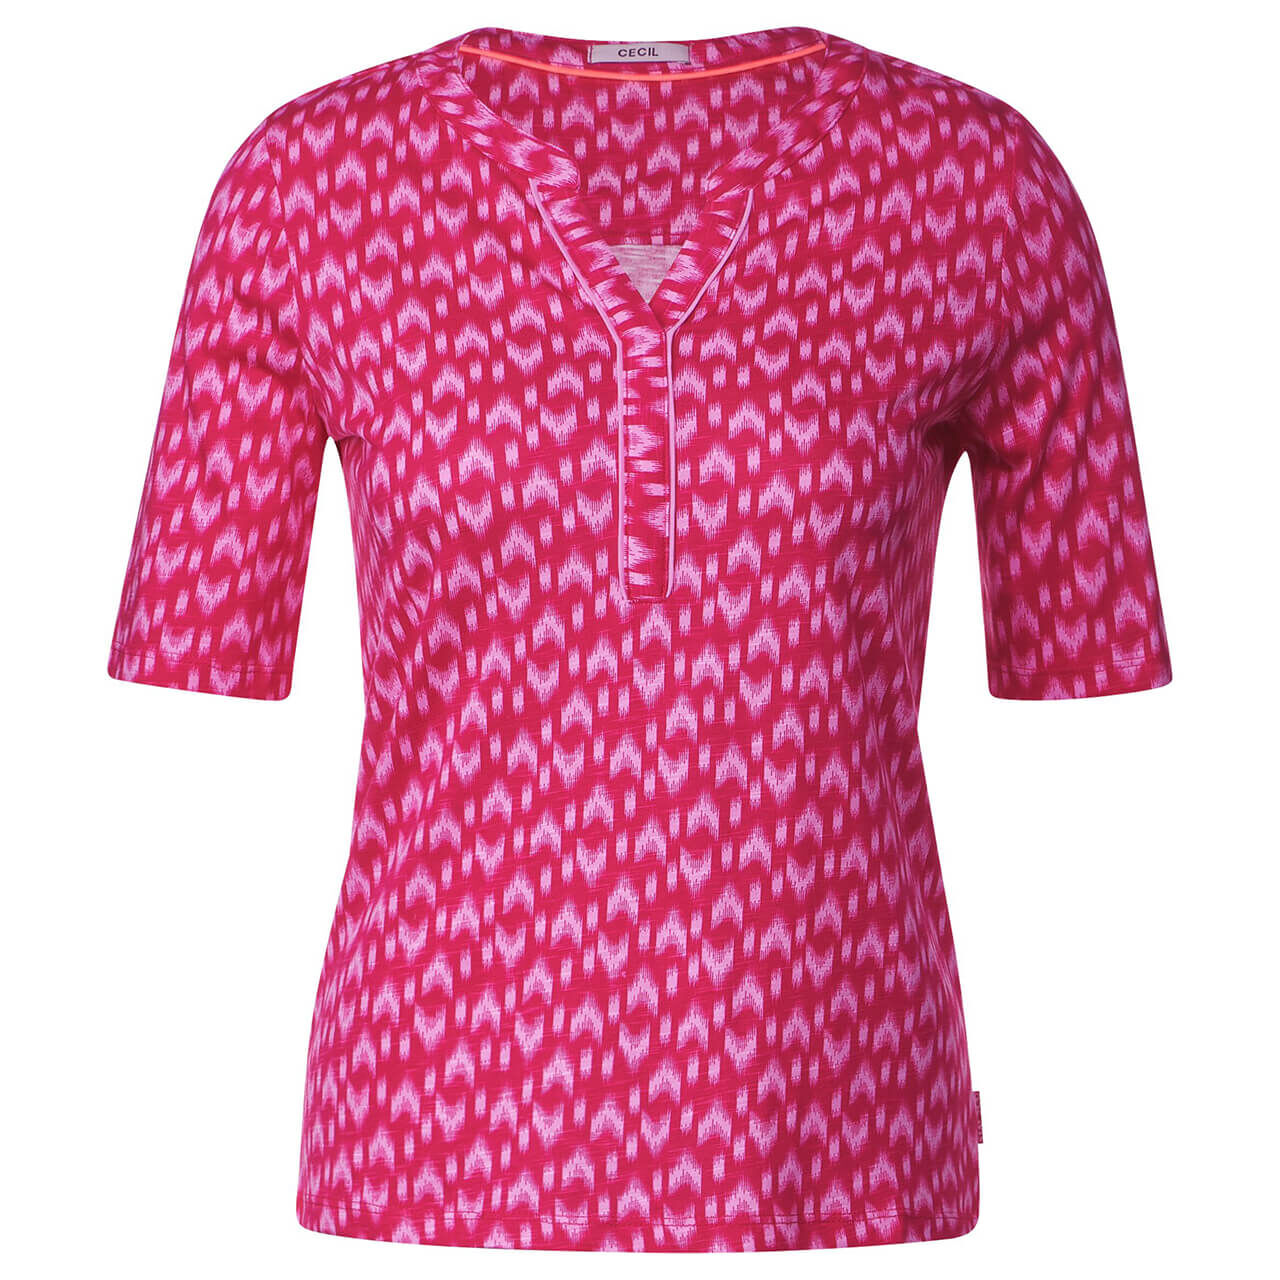 Cecil Damen T-Shirt Minimal Tunic Splitneck pink sorbet printed